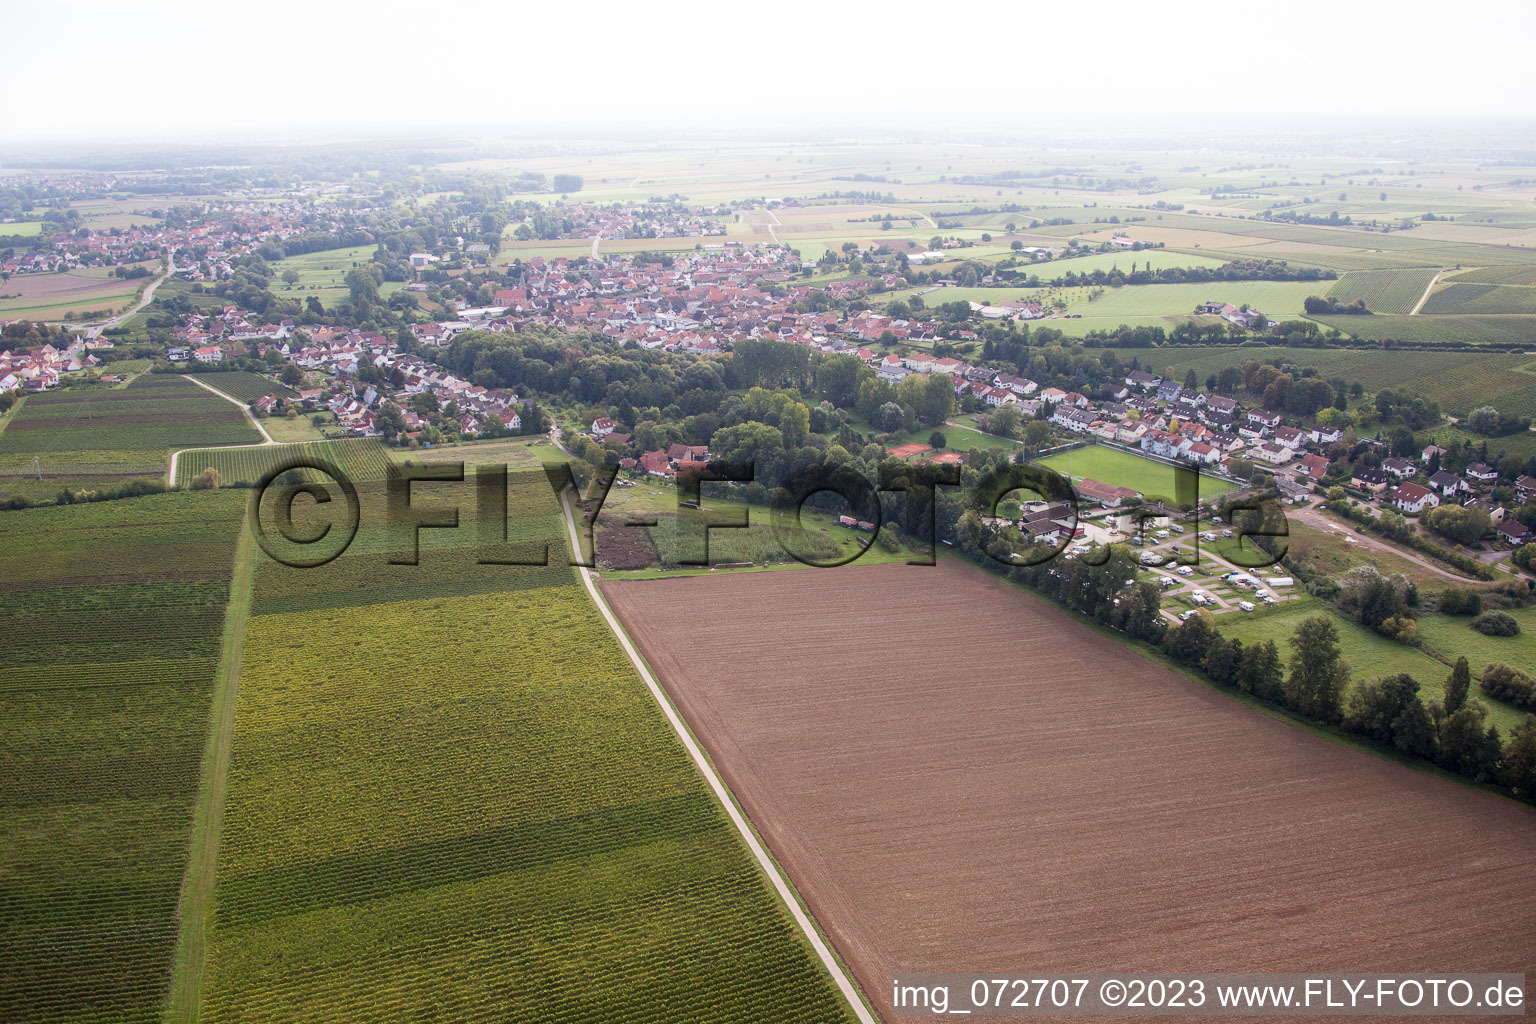 District Ingenheim in Billigheim-Ingenheim in the state Rhineland-Palatinate, Germany from above